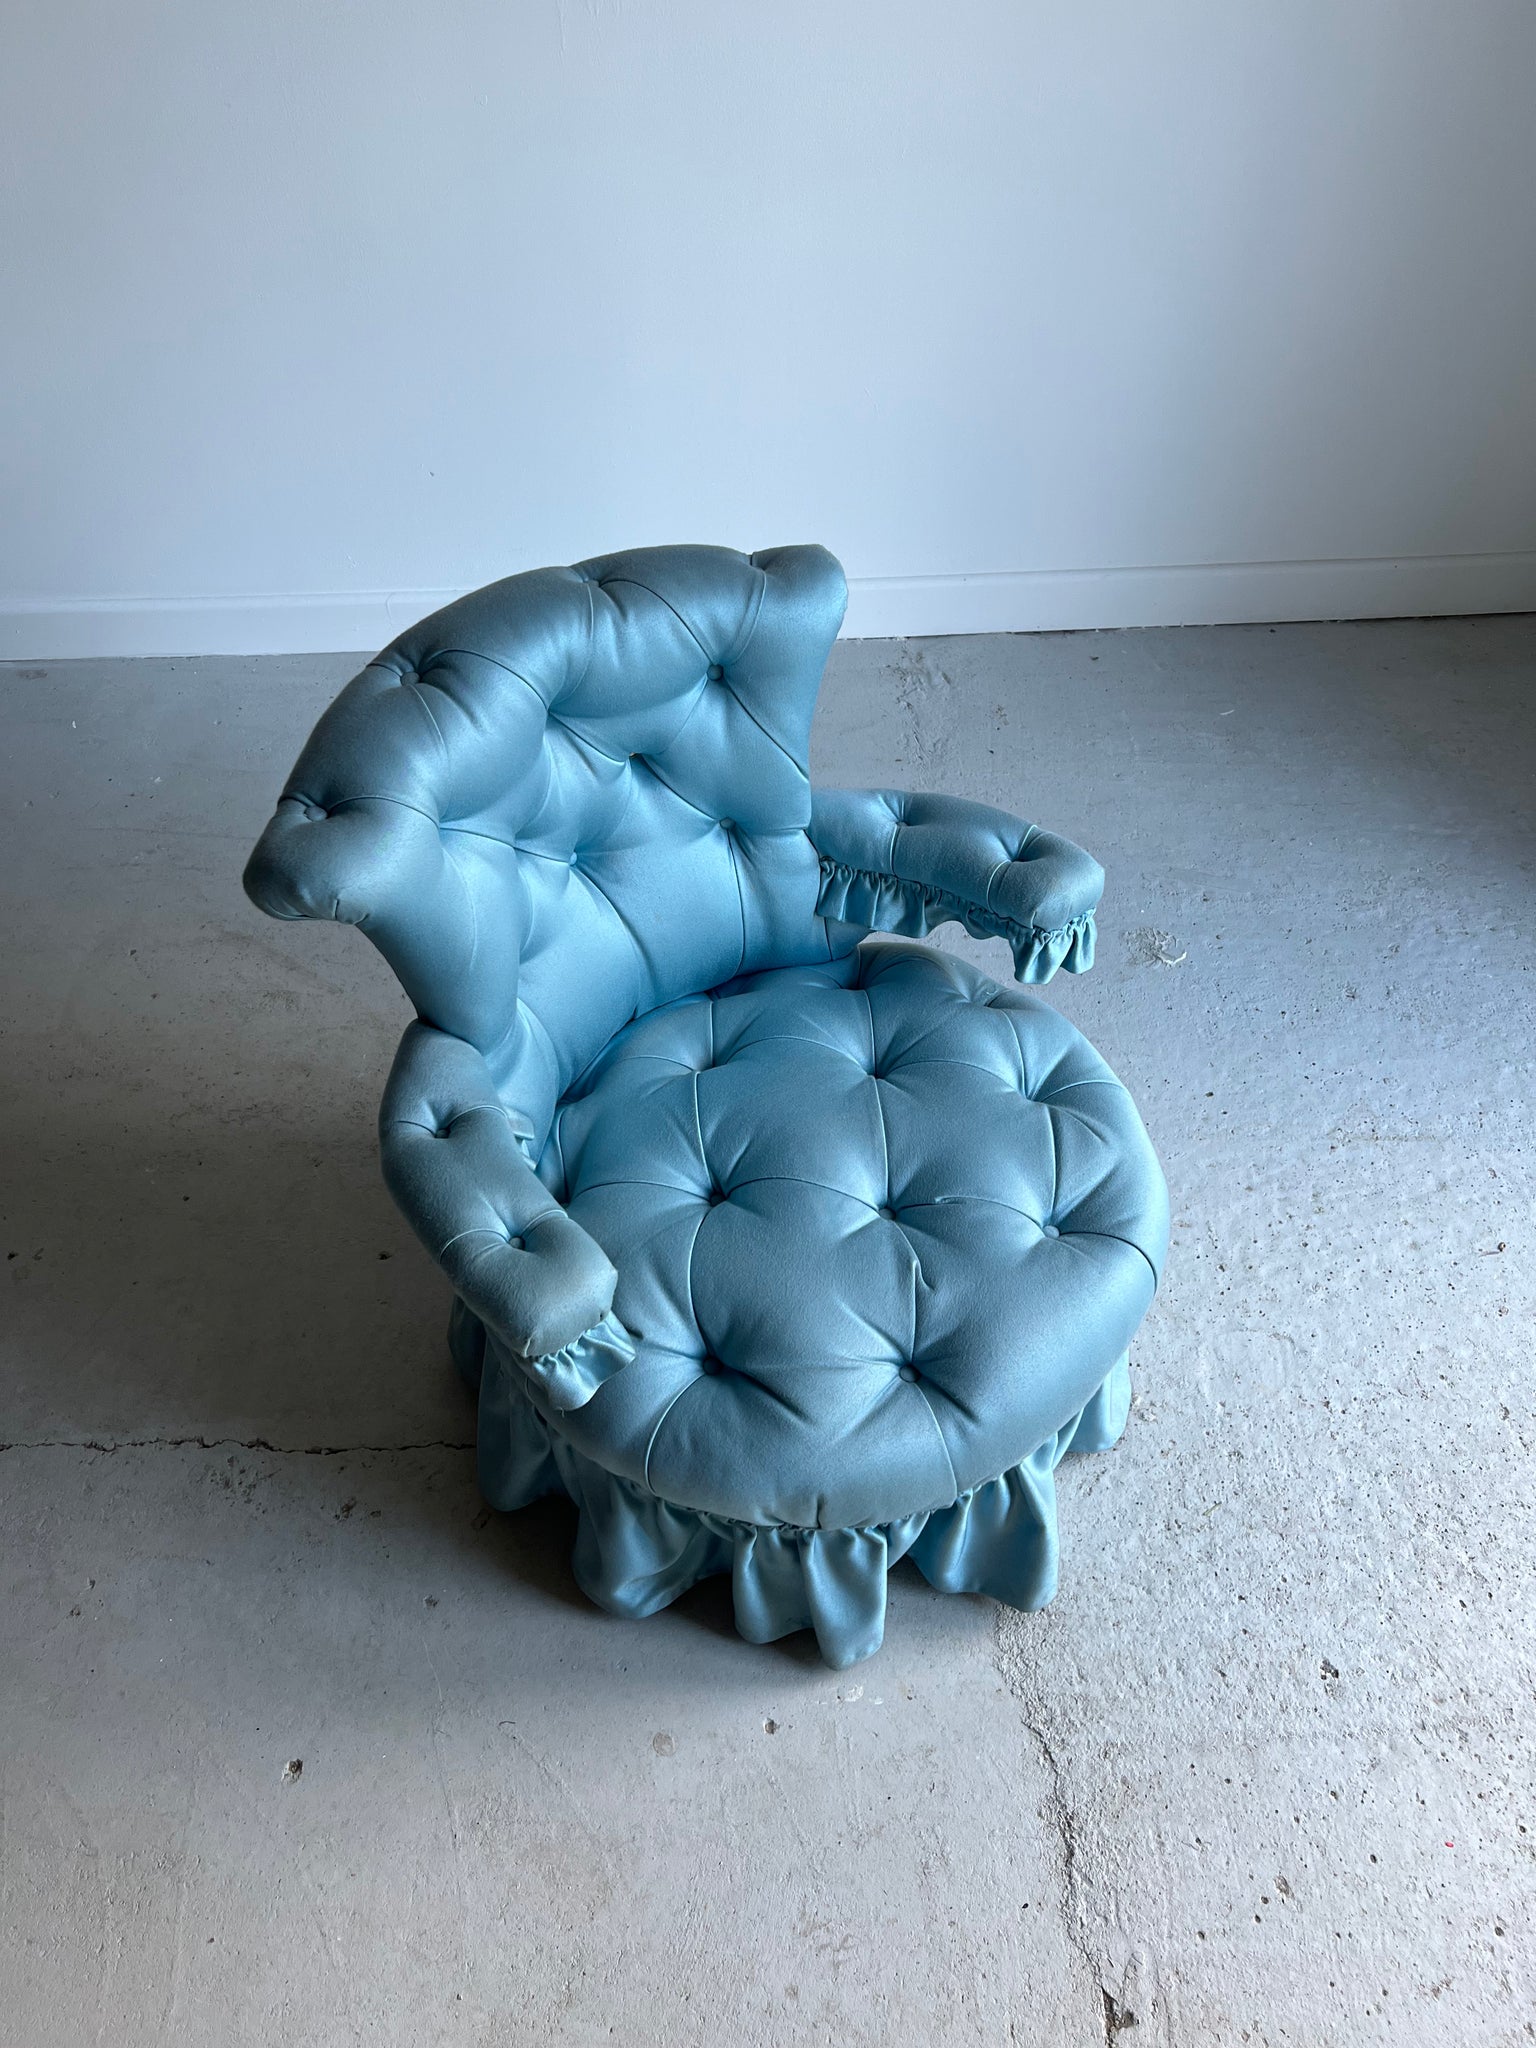 Baby Blue Ruffle Slipper Chair